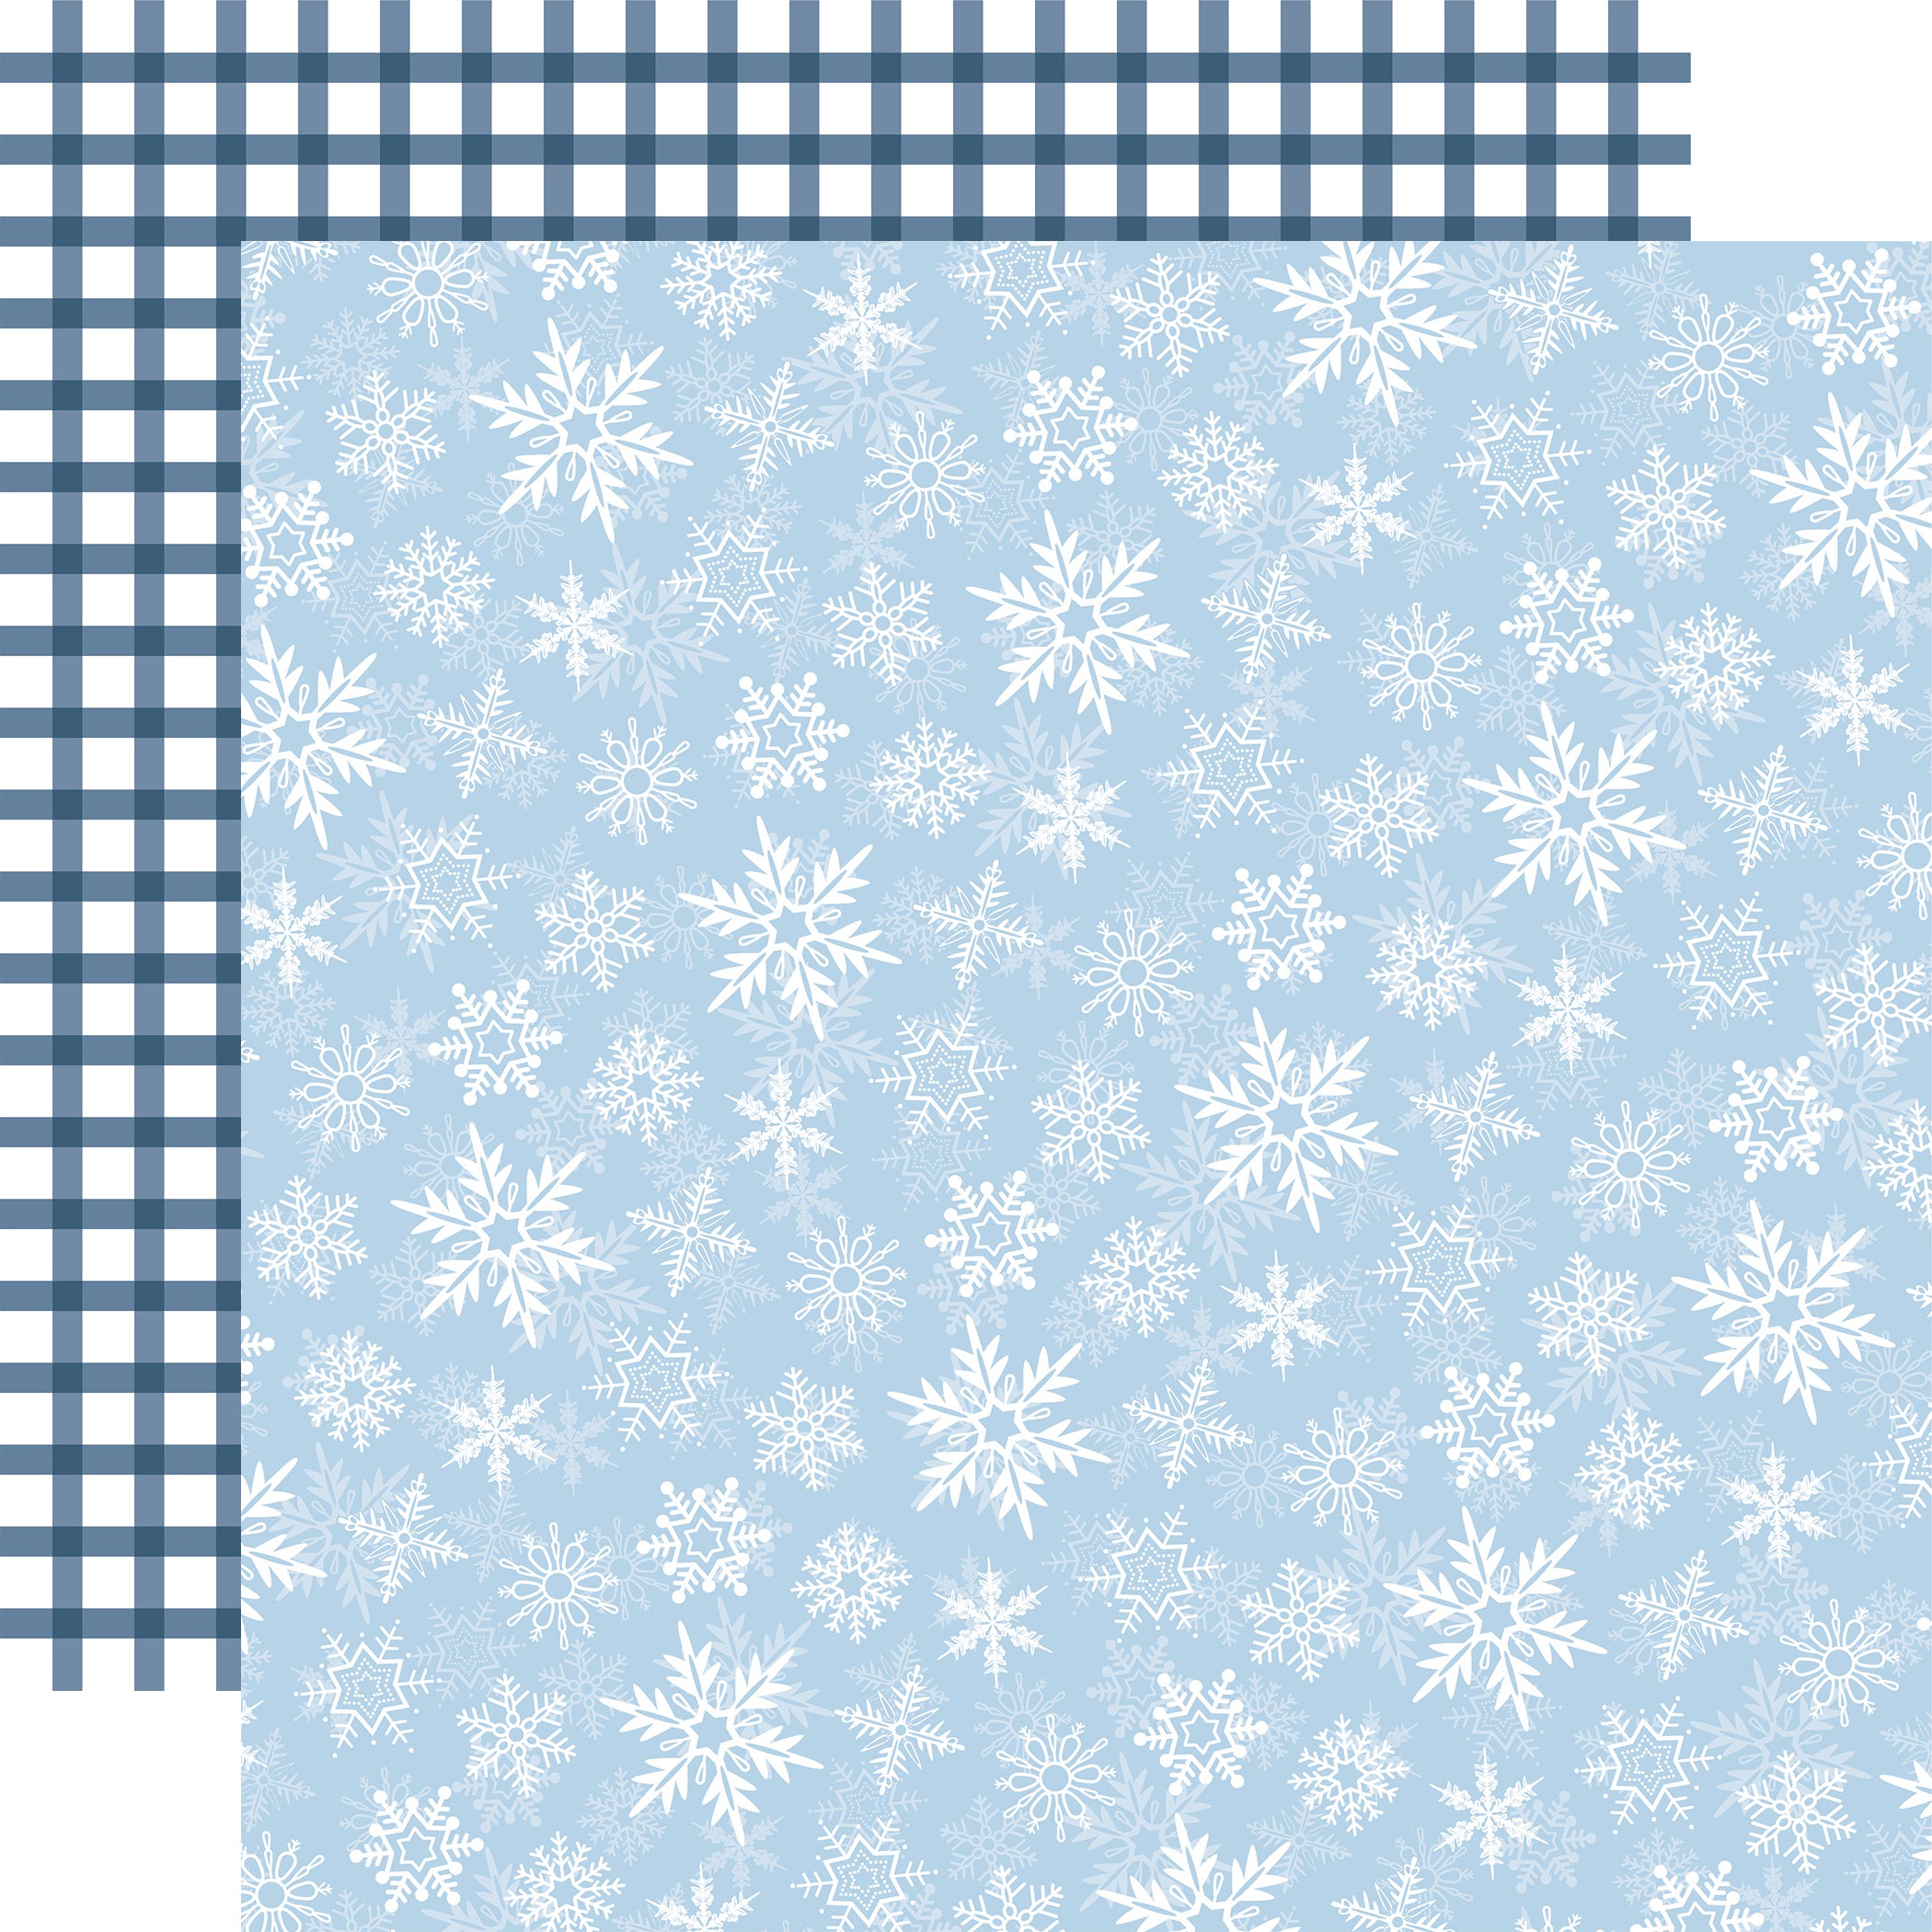 Snowflake Digital Paper. Winter Snow Scrapbook Paper. Snowflakes